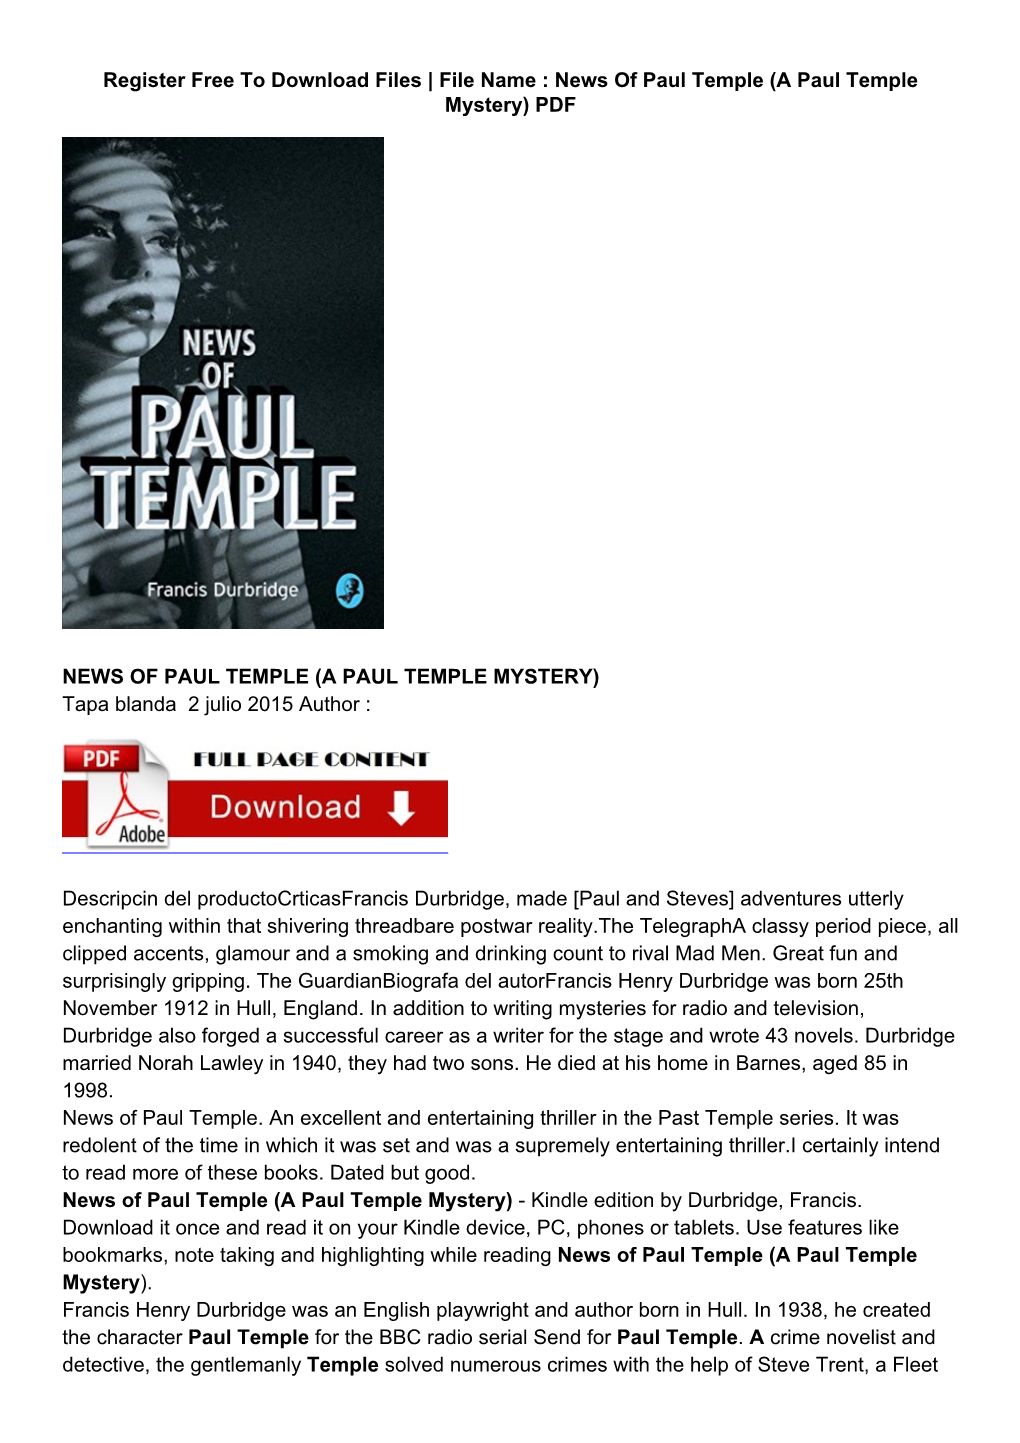 A Paul Temple Mystery) PDF